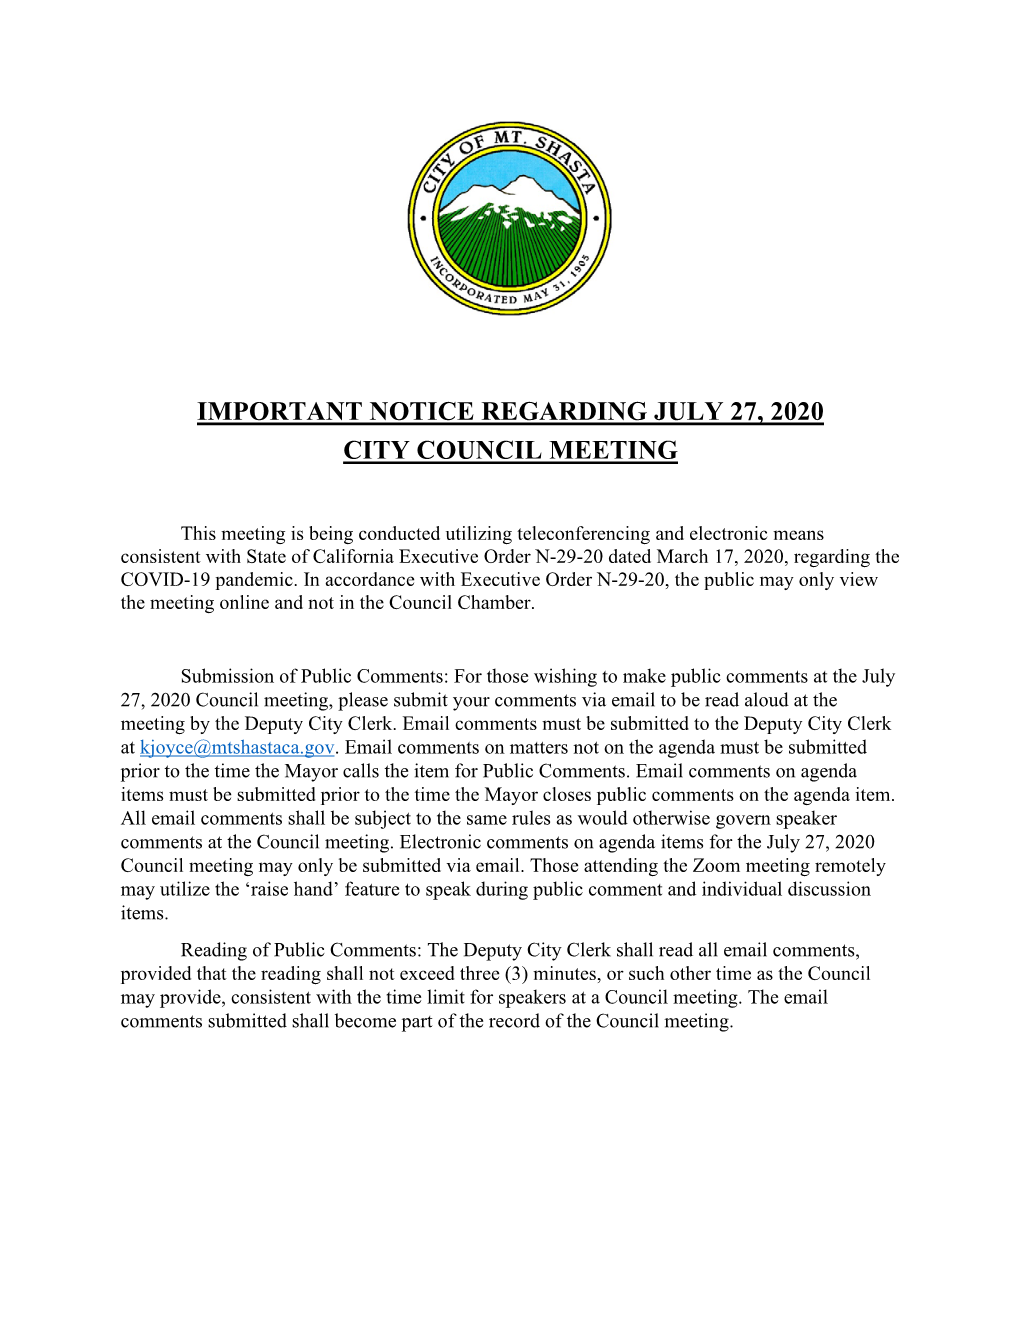 Important Notice Regarding July 27, 2020 City Council Meeting